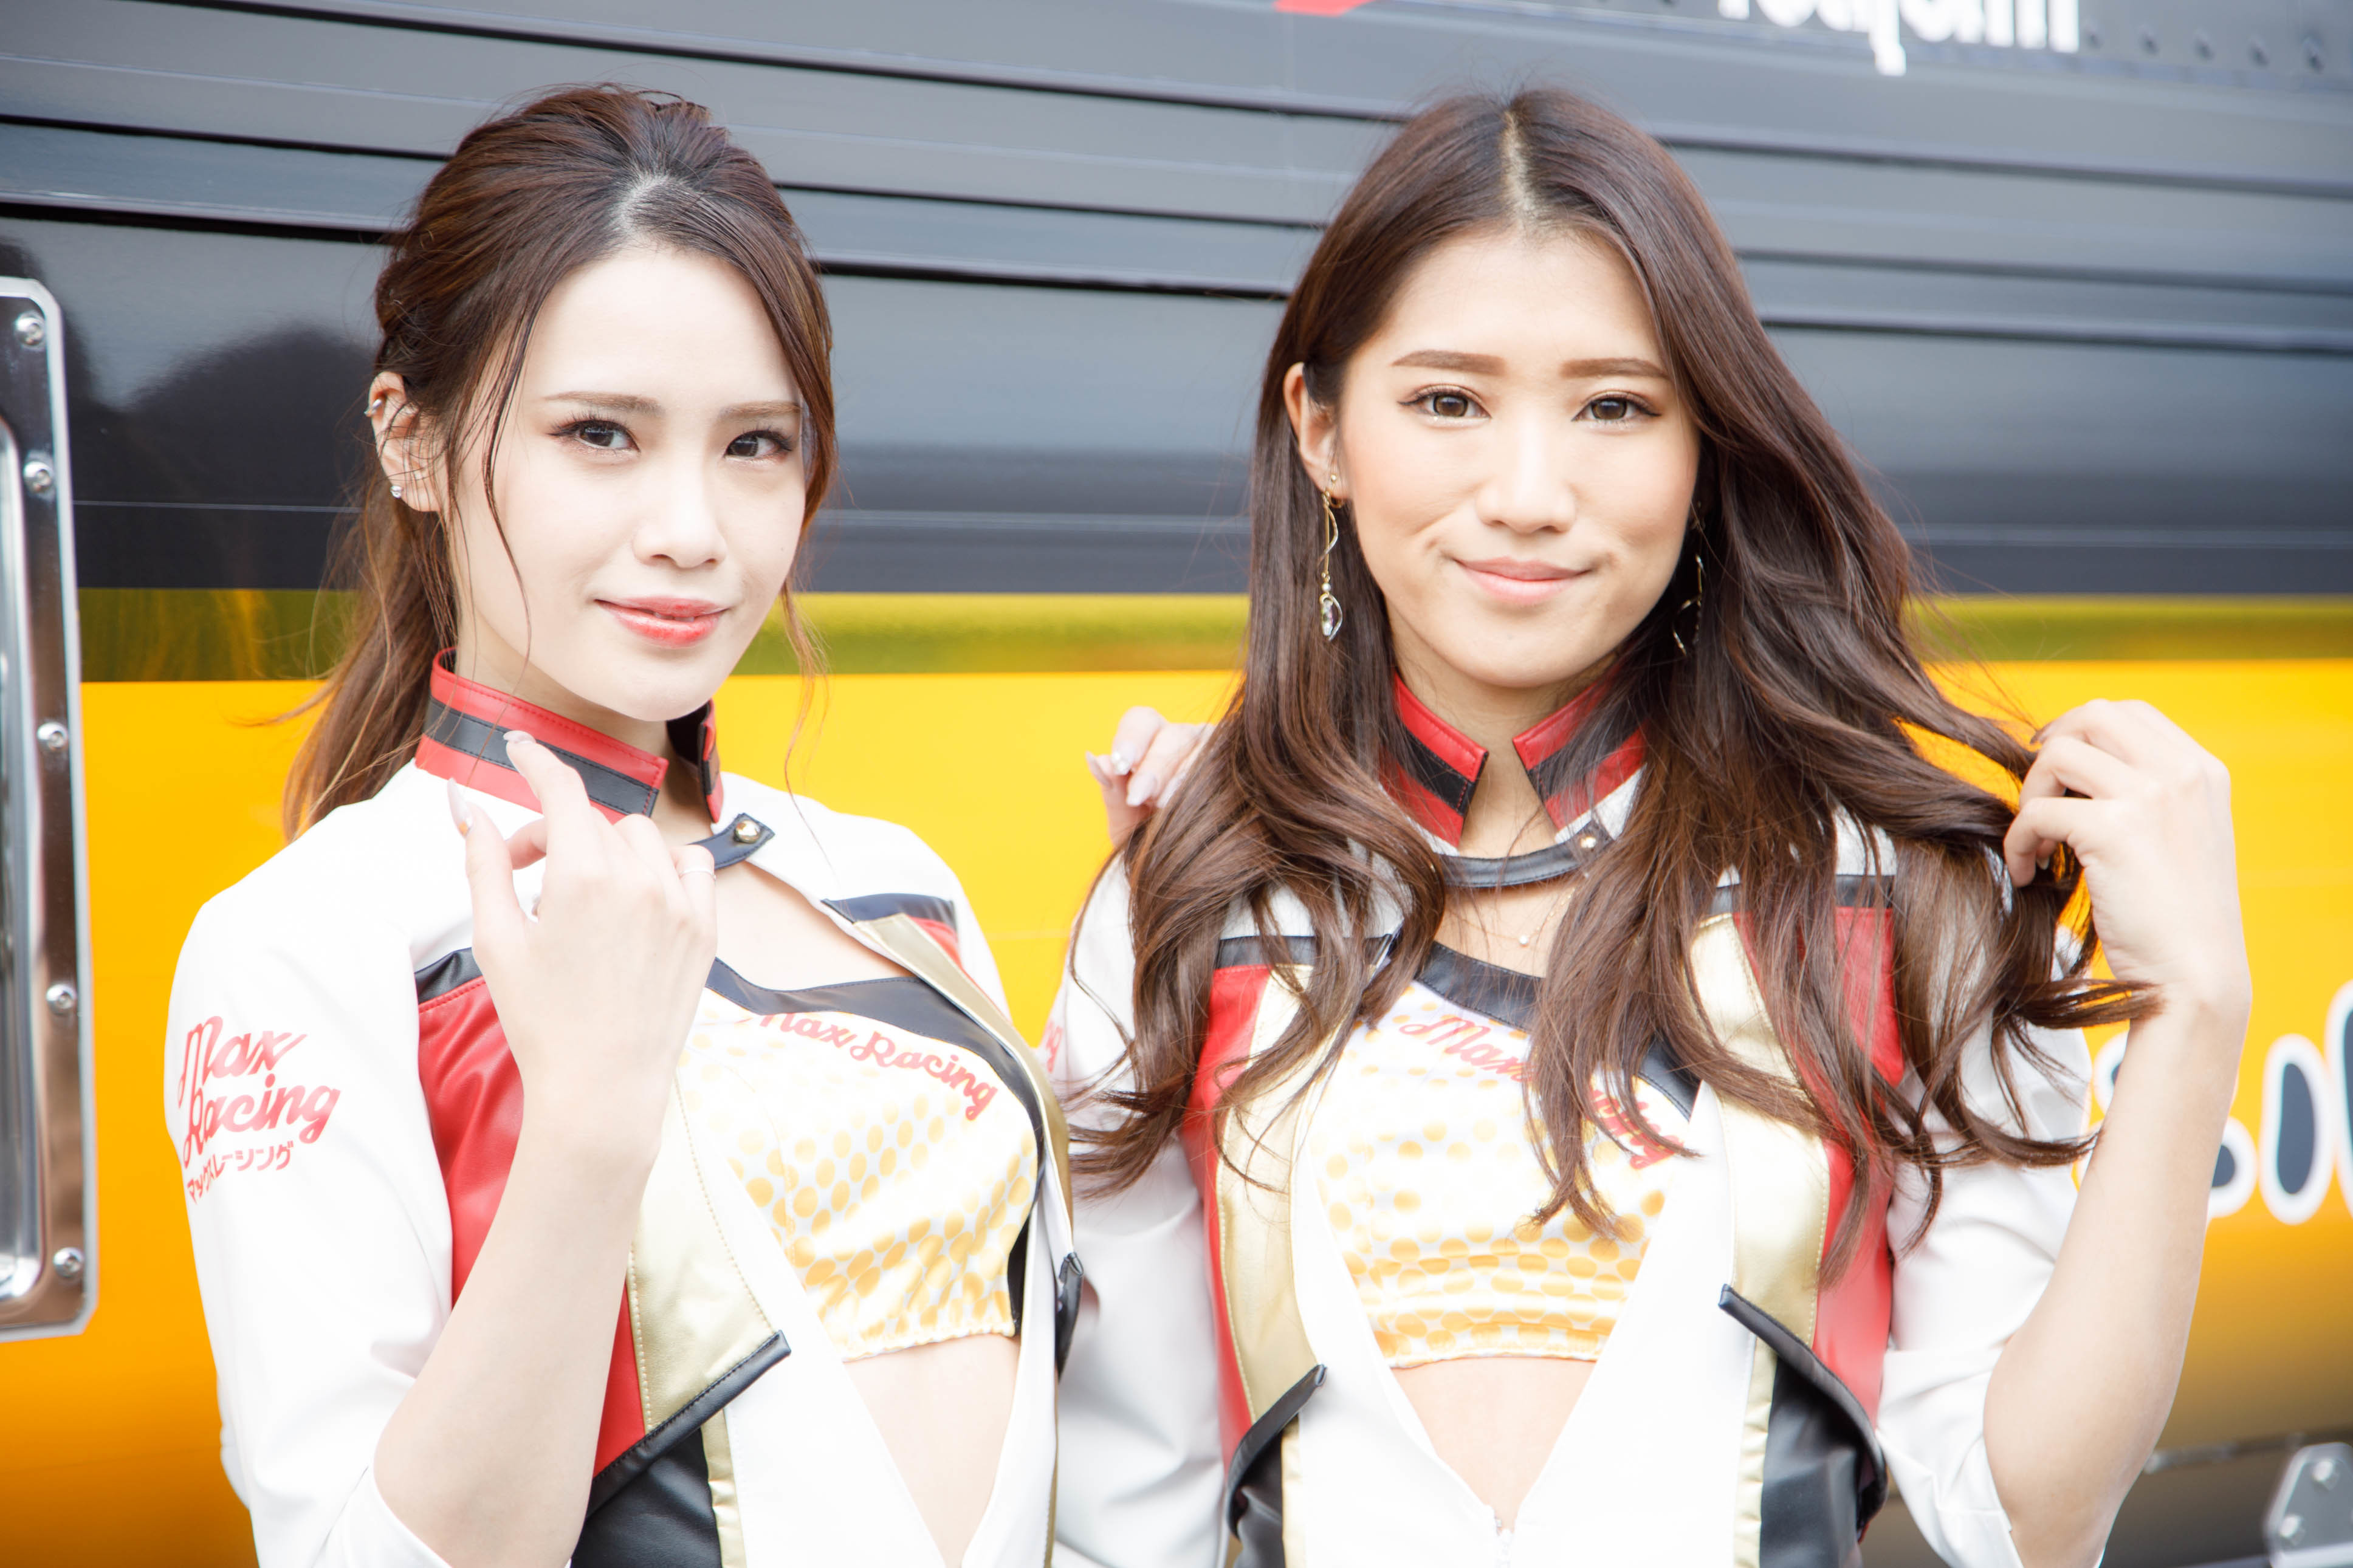  【No.244】Max Racing左から、野田桃加、上野さや（マックスガールズ）photo by Igarashi KazuhiroフォトギャラリーGT500編はこちら＞＞